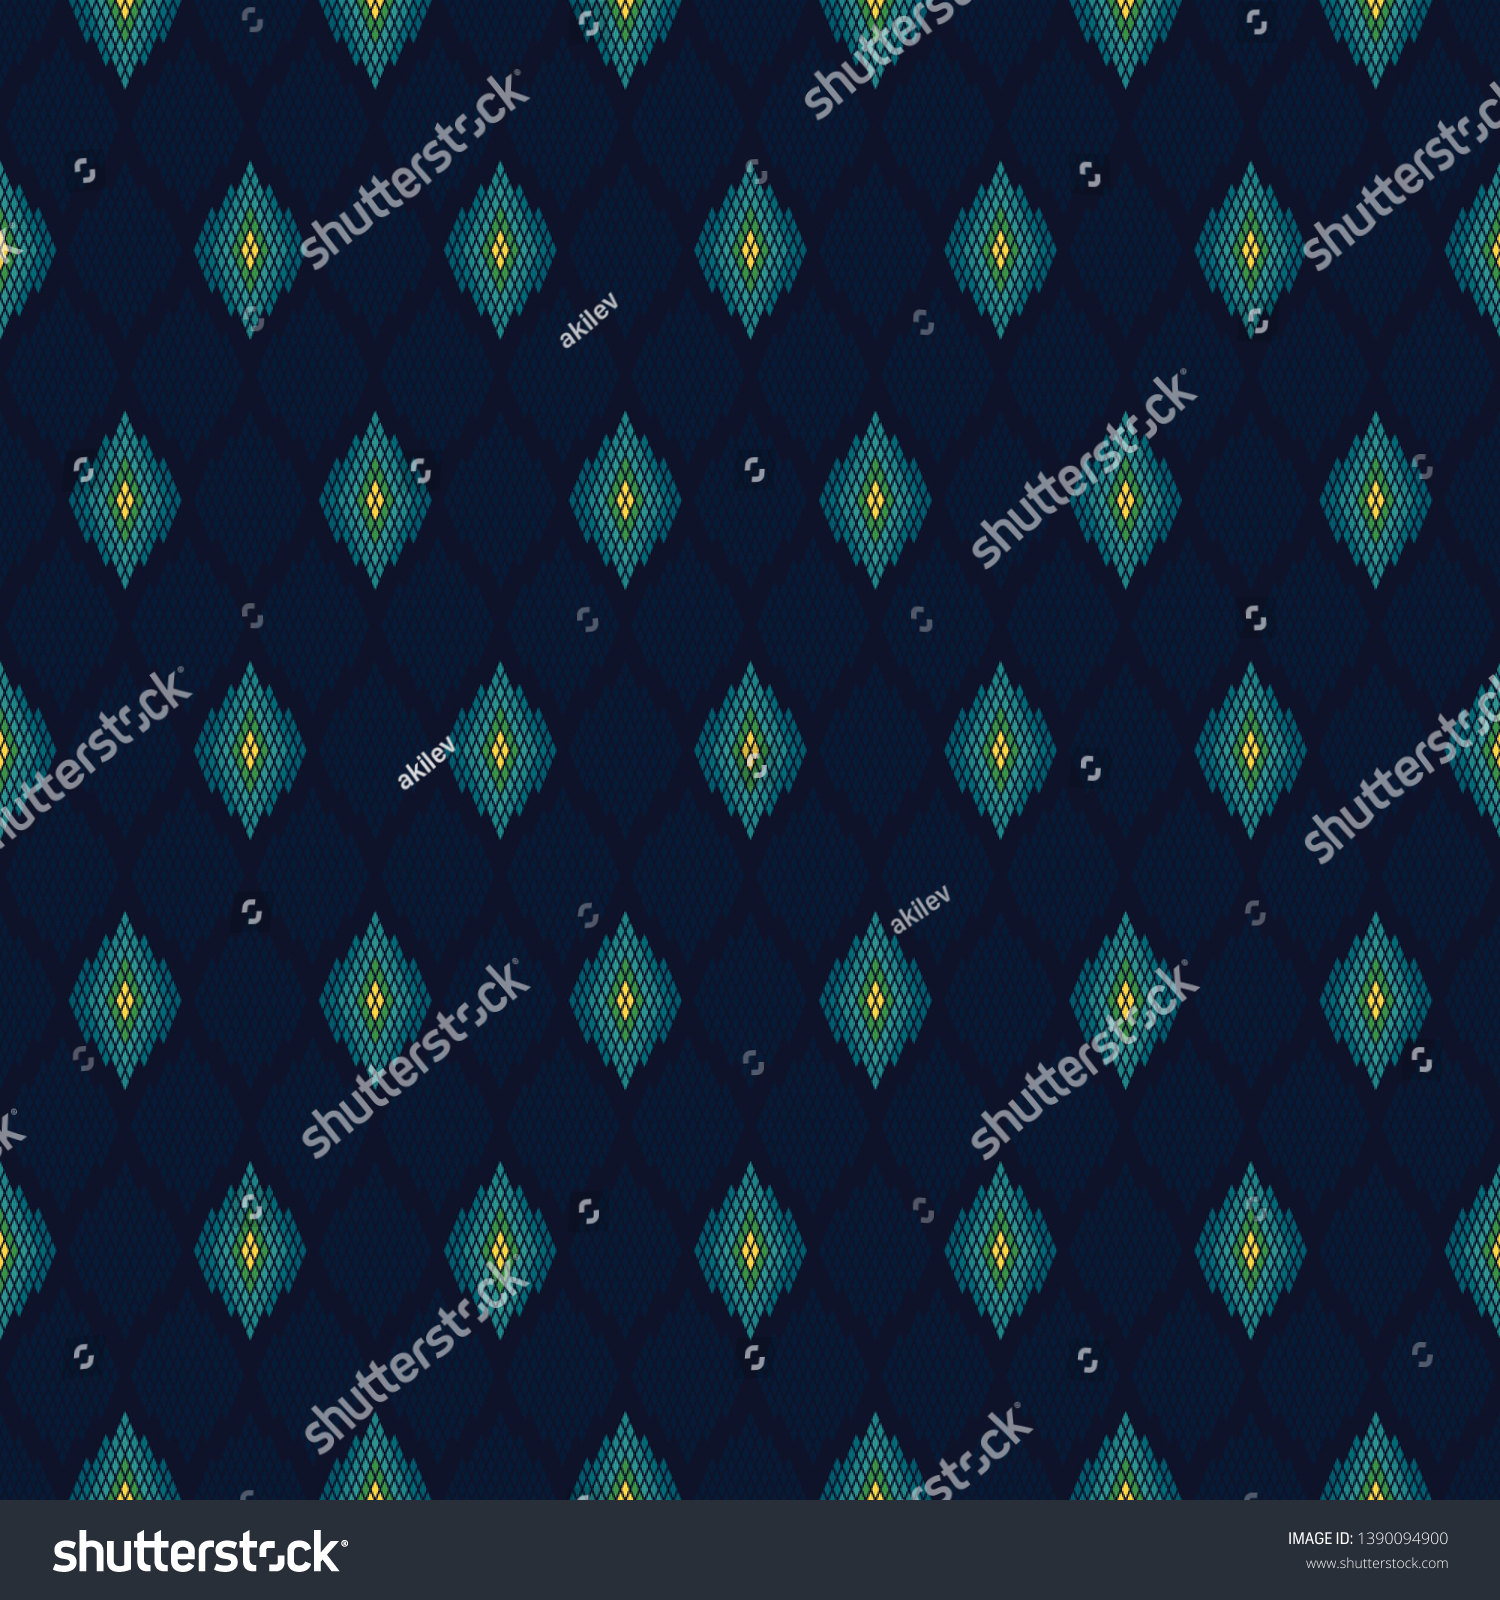 SVG of Diamond pattern modern argyle background. Small rhombus shapes motif. Minimal monochrome simple geo plaid print block for apparel textile, dress fabric, fashion garment, mens shirt, swimwear. svg